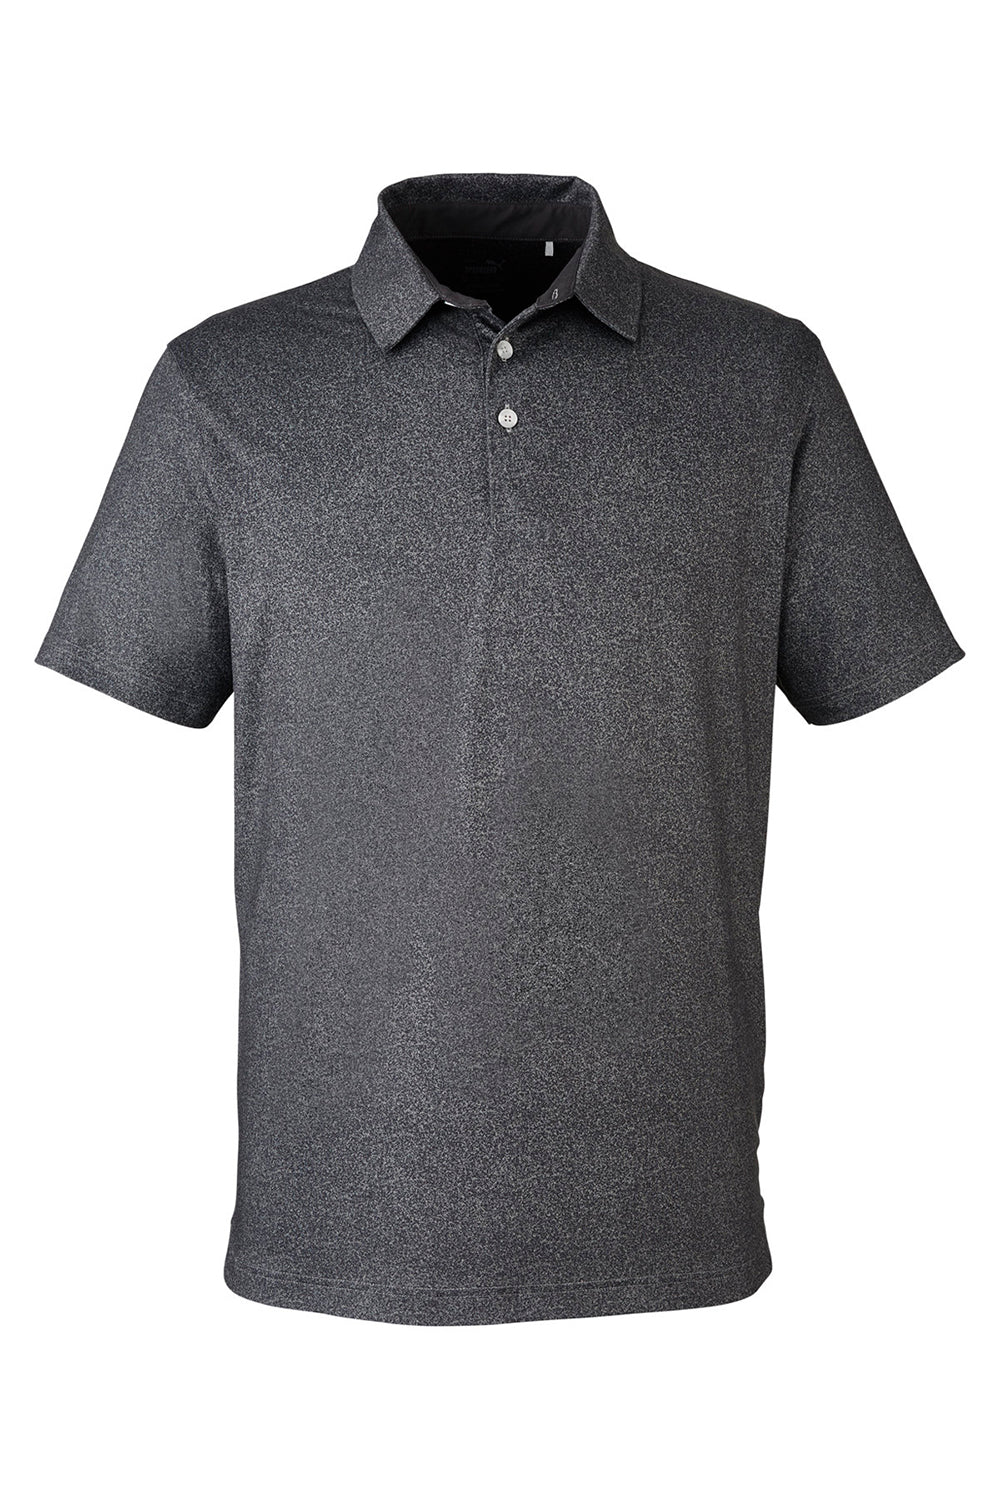 Puma 538748 Mens Cloudspun Primary Short Sleeve Polo Shirt Black Flat Front